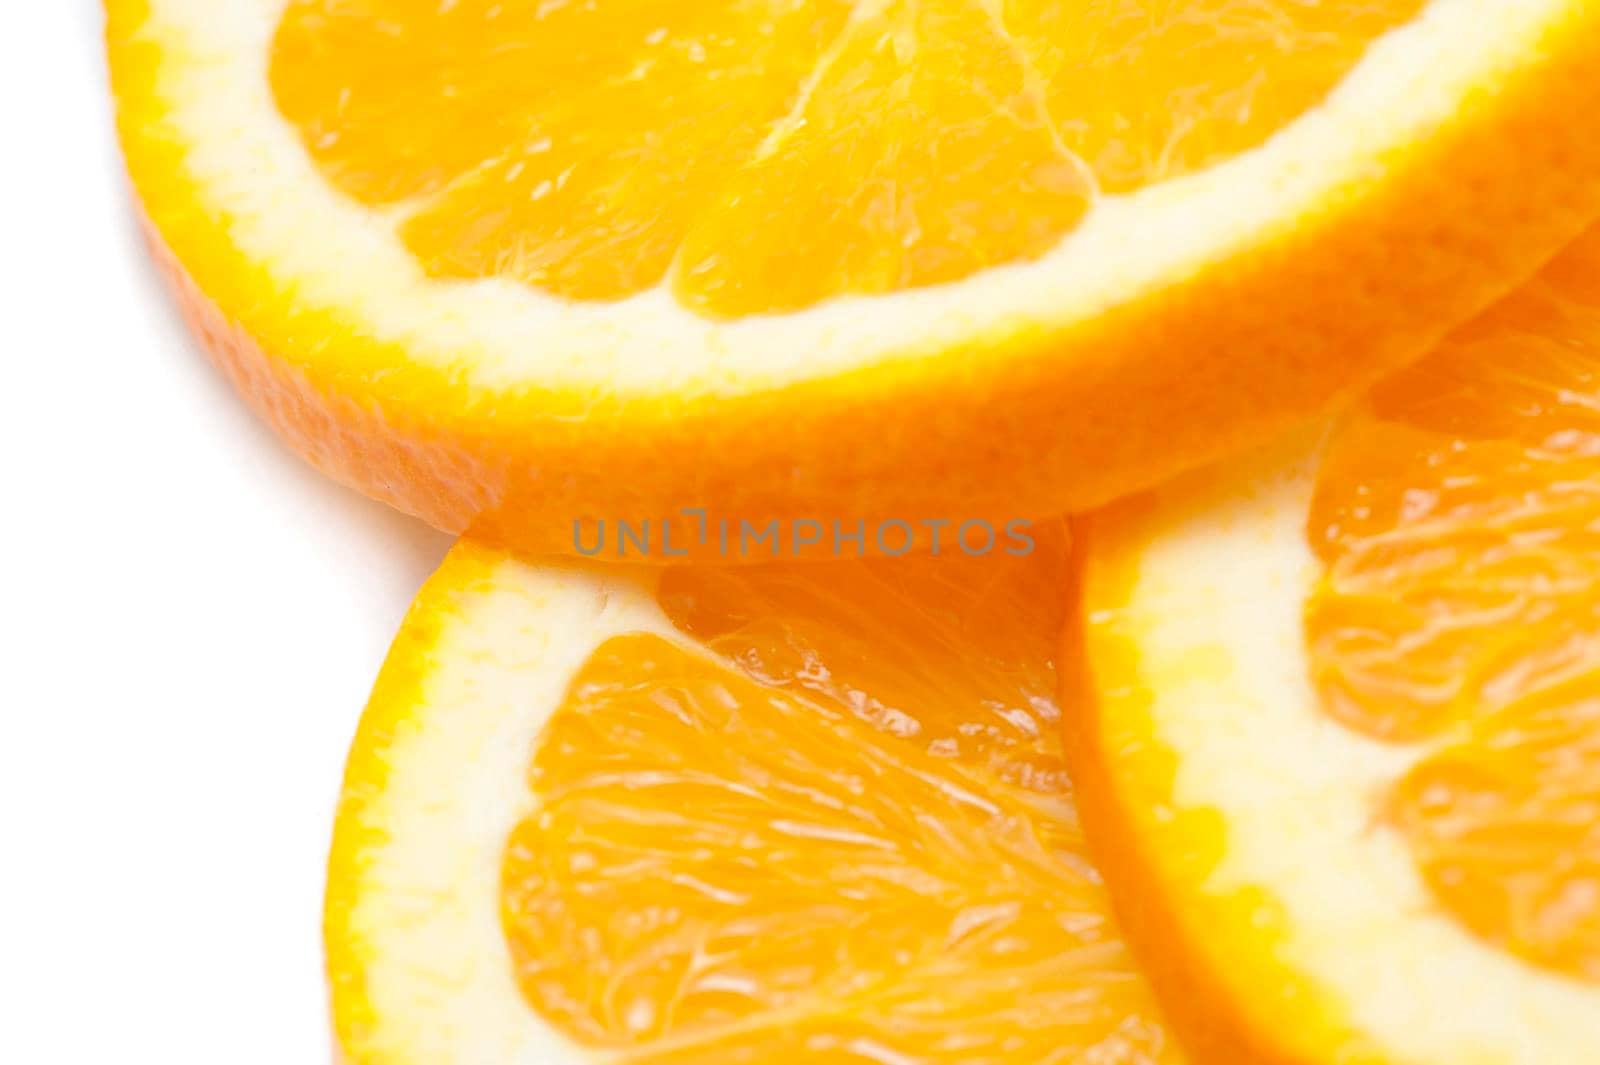 Slices of a fresh tasty juicy orange by sanisra